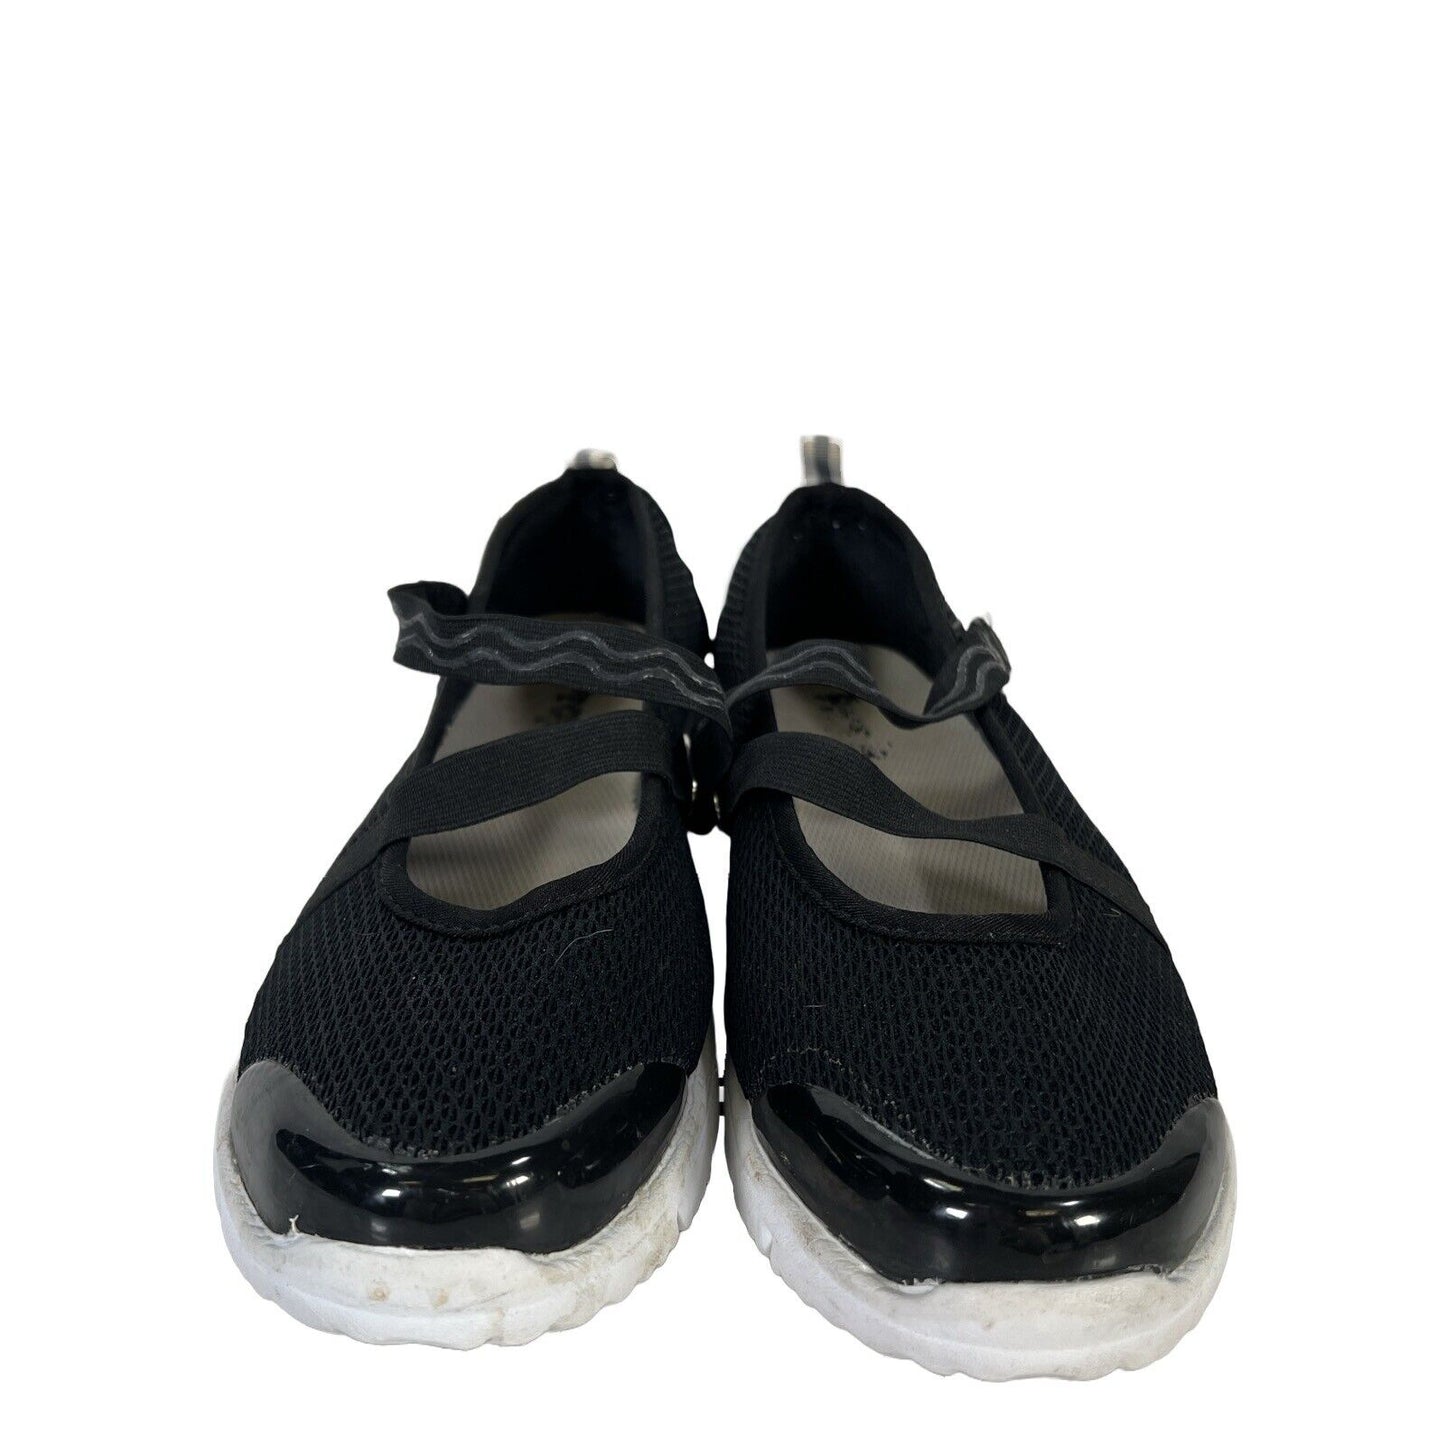 Propet Women's Black Mary Jane TravelWalker Athletic Shoes - 9D Wide